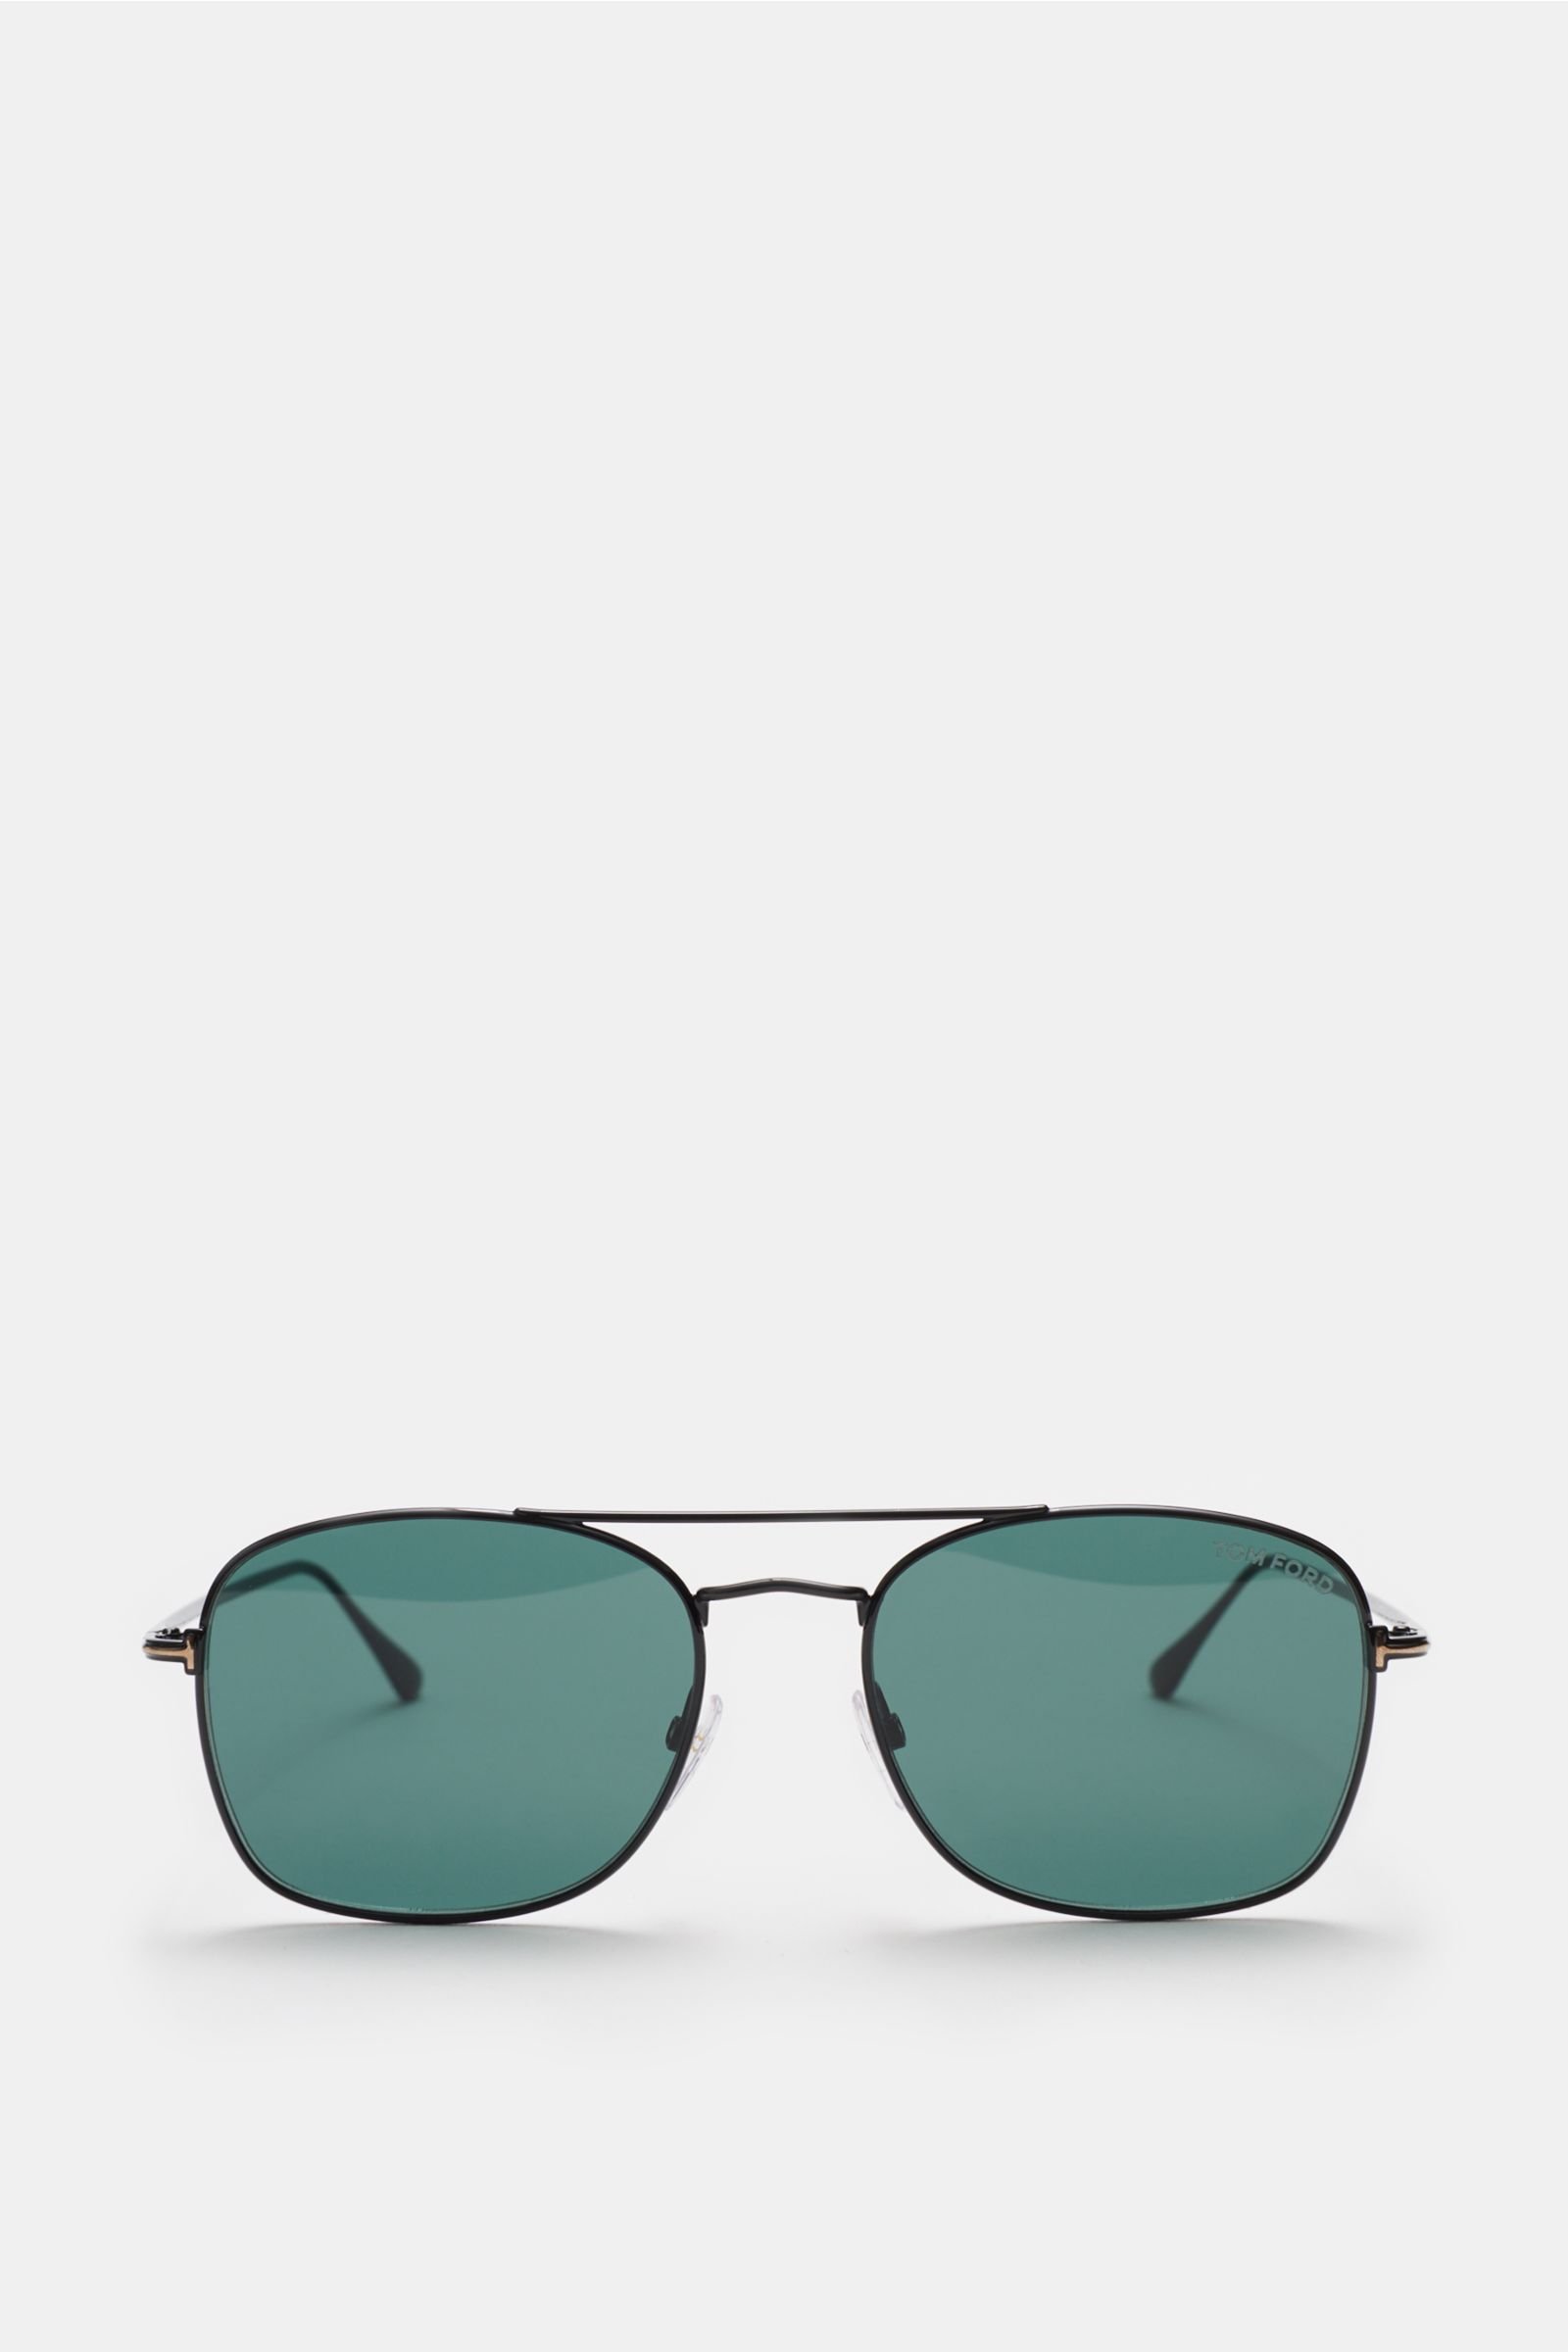 Sunglasses 'Luca' black/green